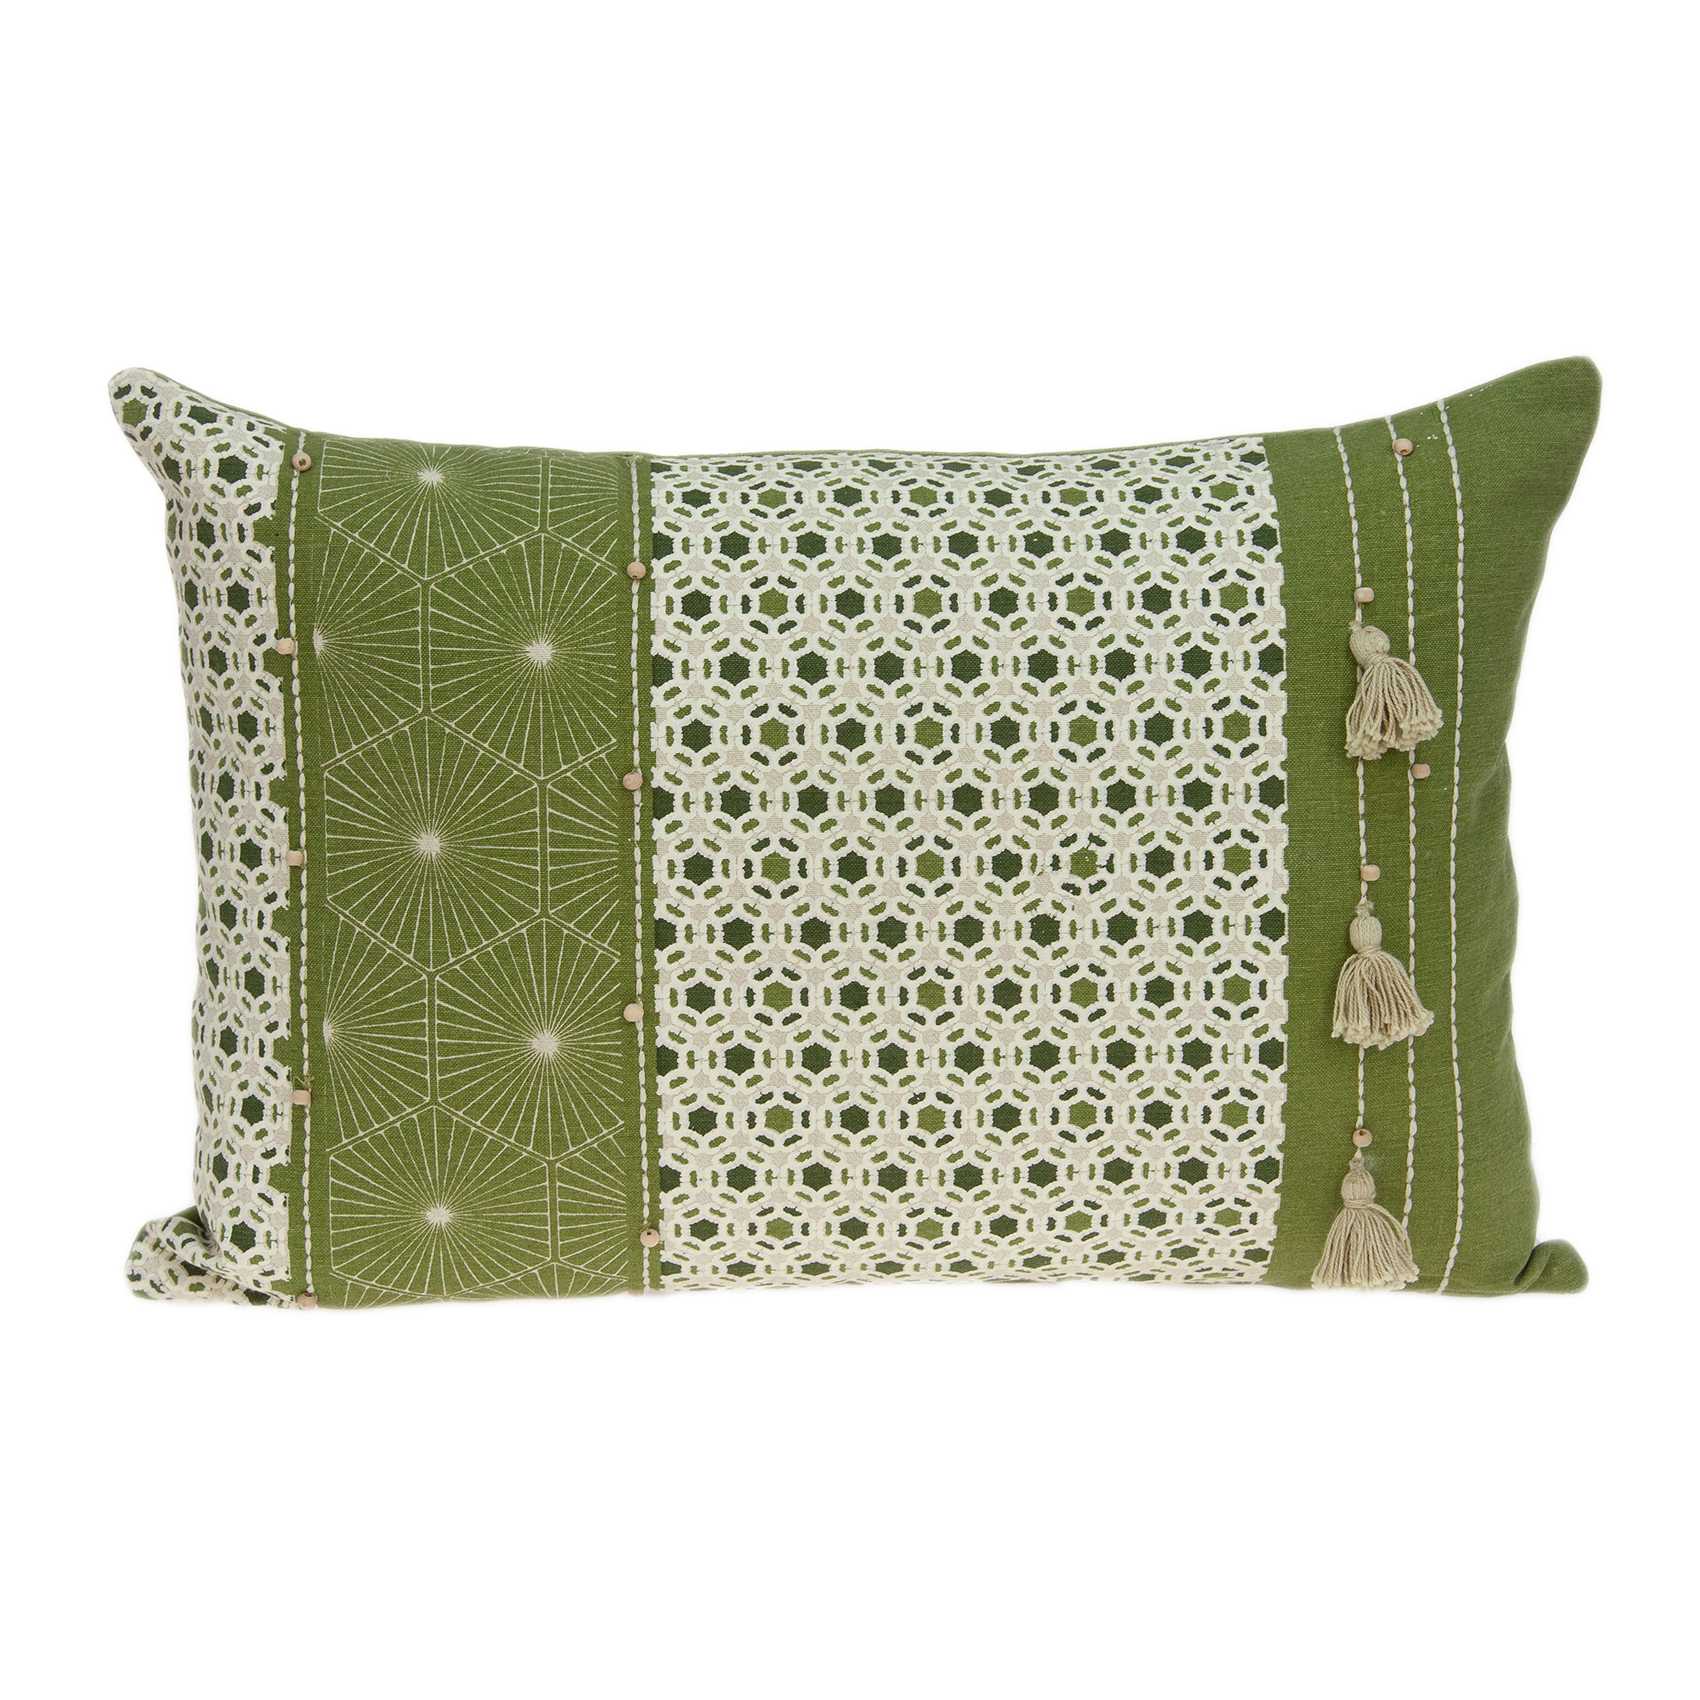 20" x 0.5" x 14" Tropical Green Pillow Cover